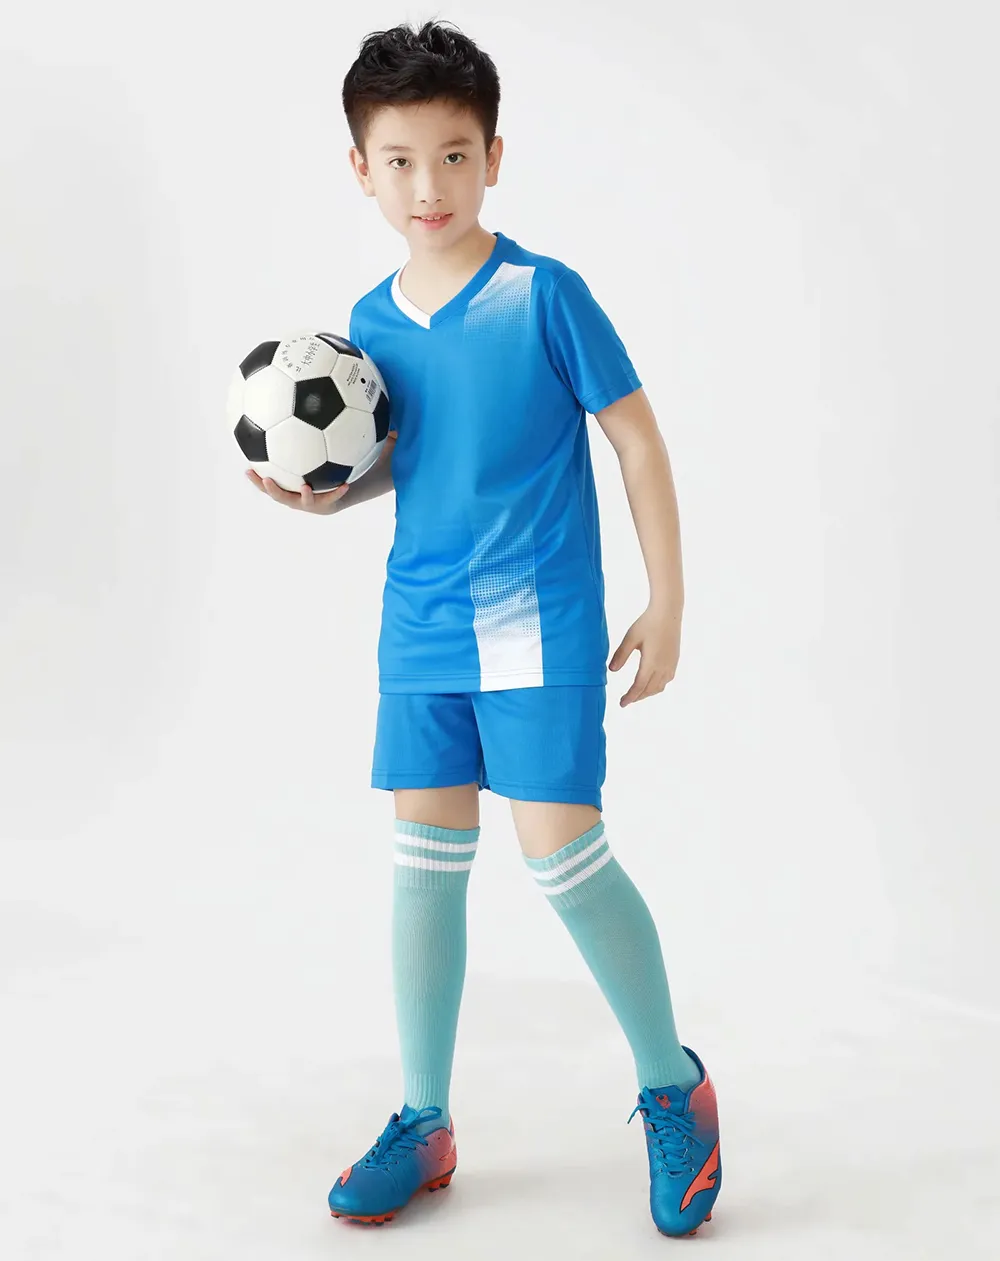 Jessie_kicks #G461 LJR aiir joordan 5 Design 2021 modne koszulki odzież dziecięca Ourtdoor Sport